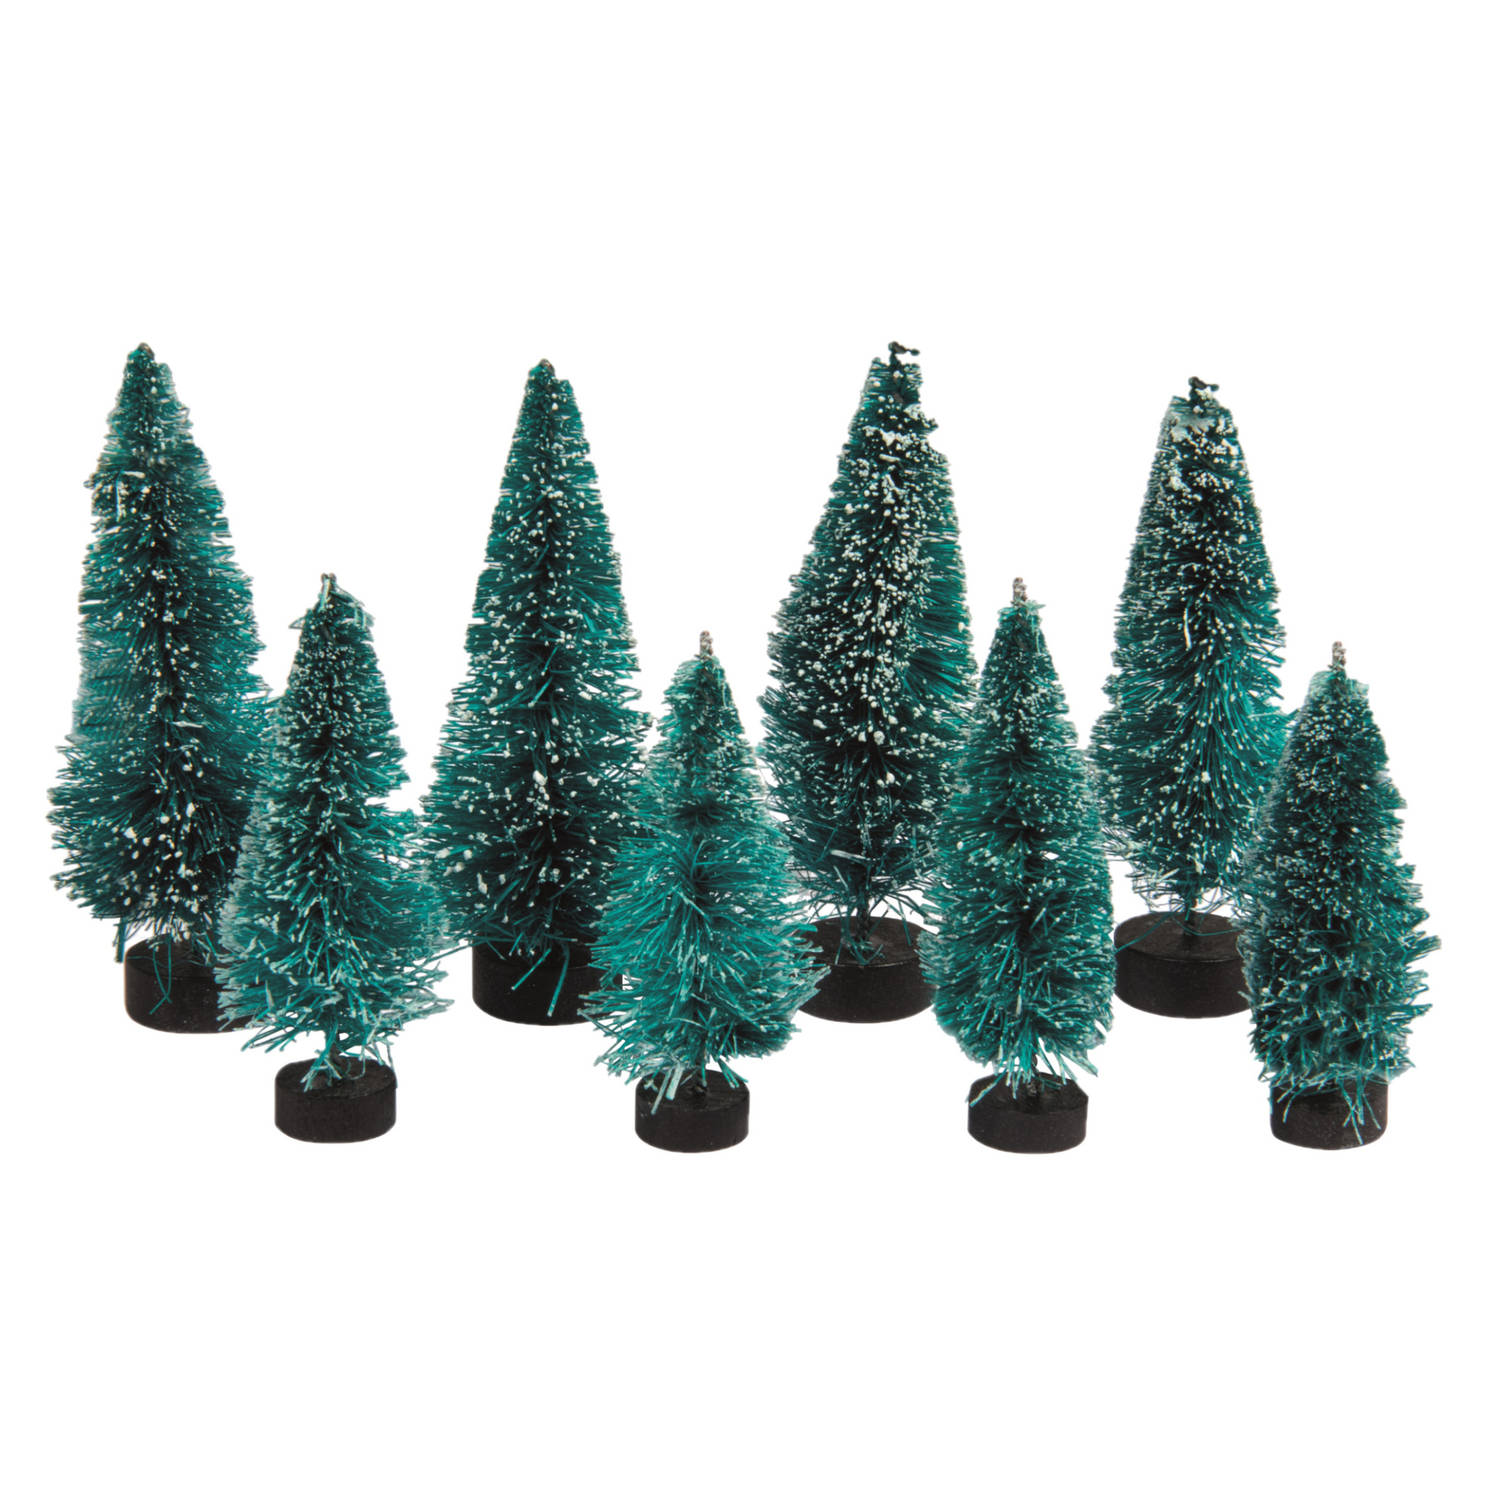 Rayher hobby kerstdorp miniatuur boompjes 8x stuks 5 en 7 cm Kerstdorpen